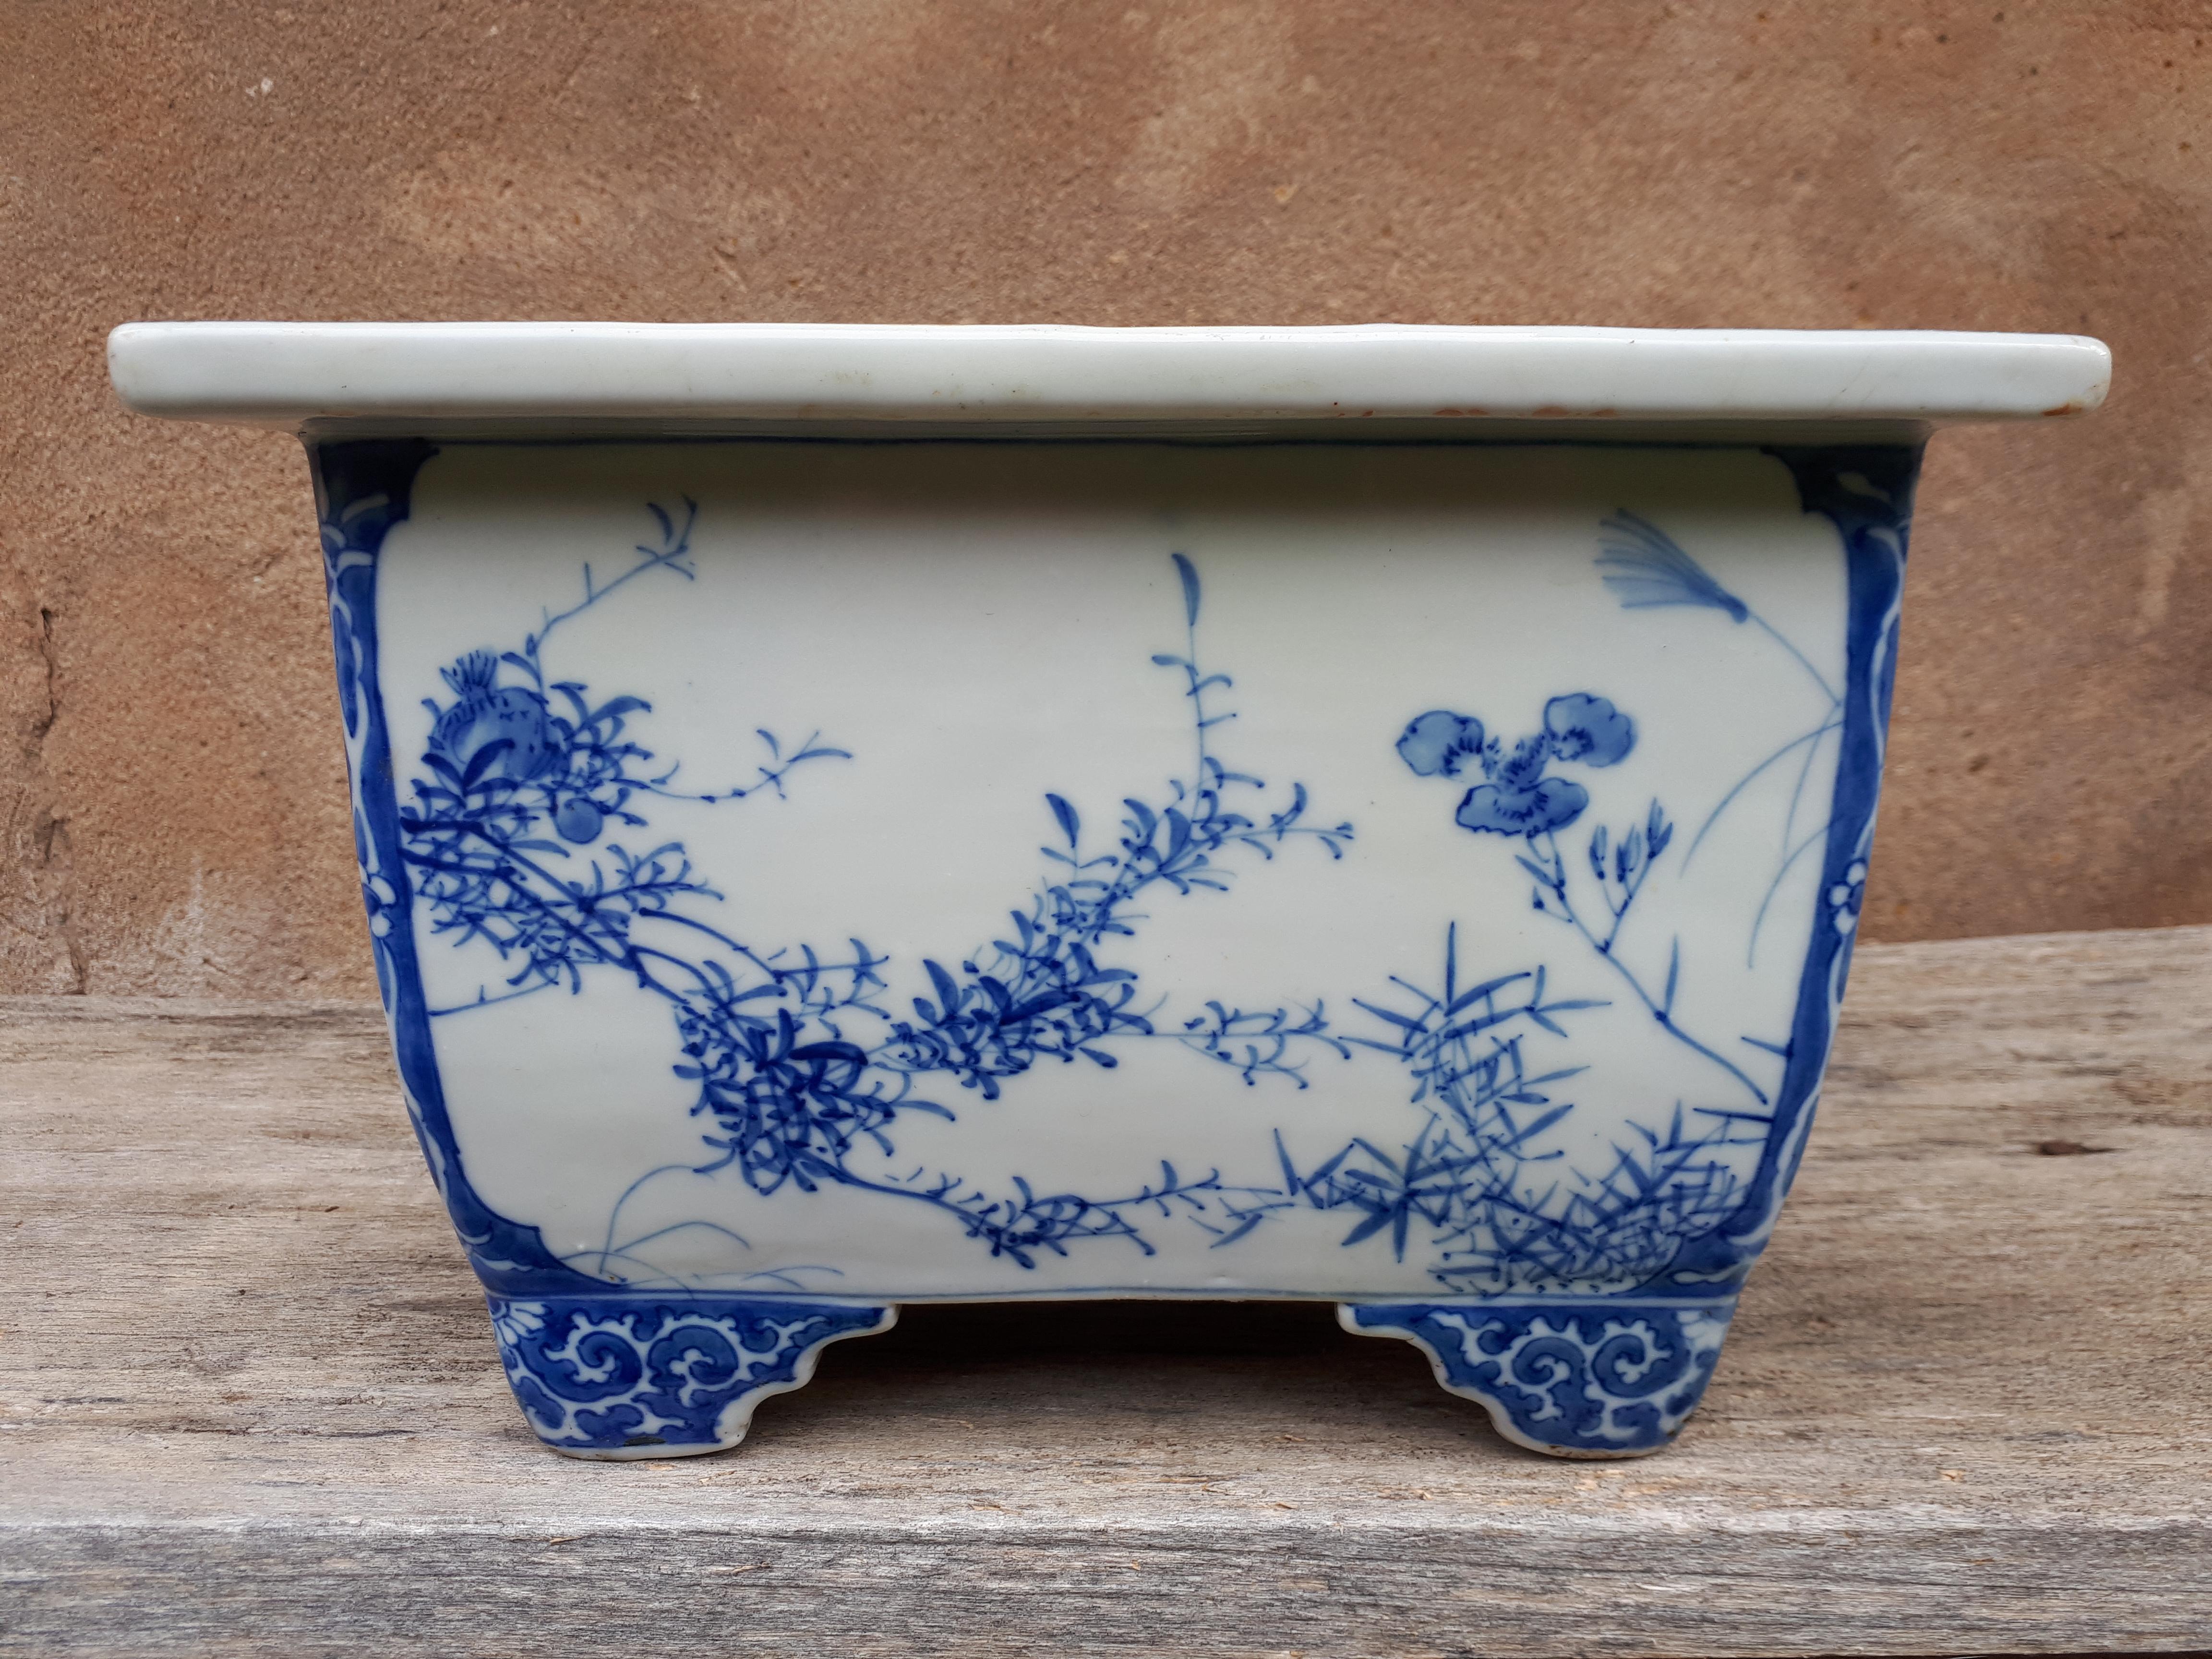 19th Century Large Japanese Planter In Seto Porcelain With Floral Decor, Meiji Era Japan